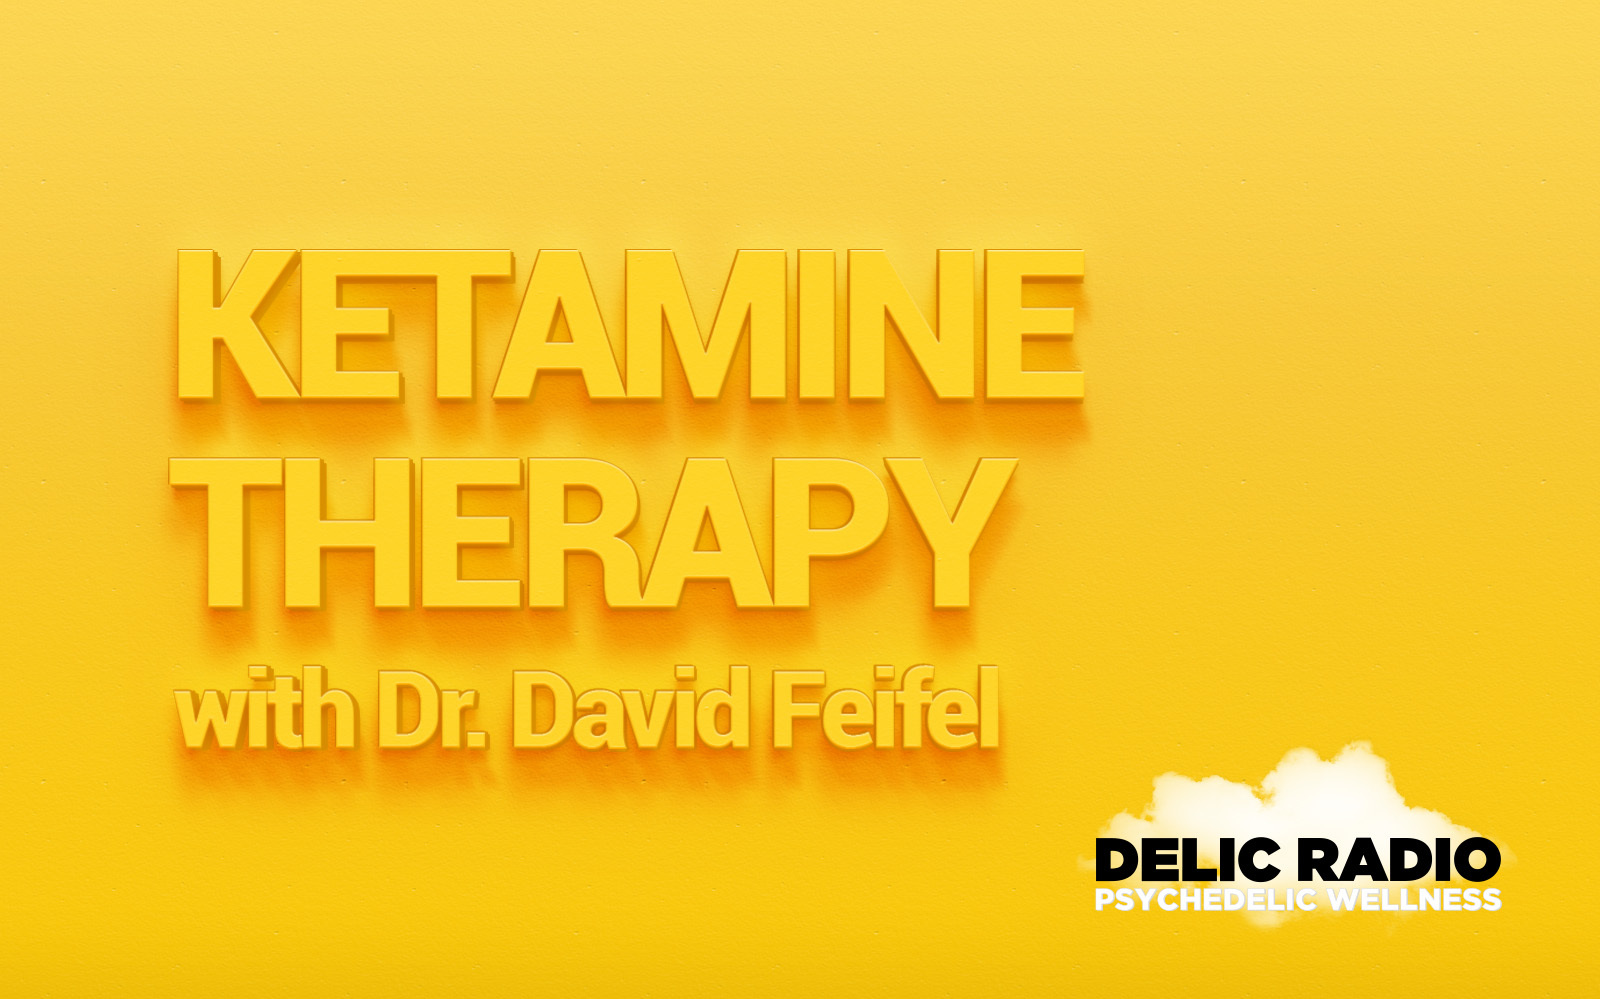 Delic Radio Ketamine Therapy